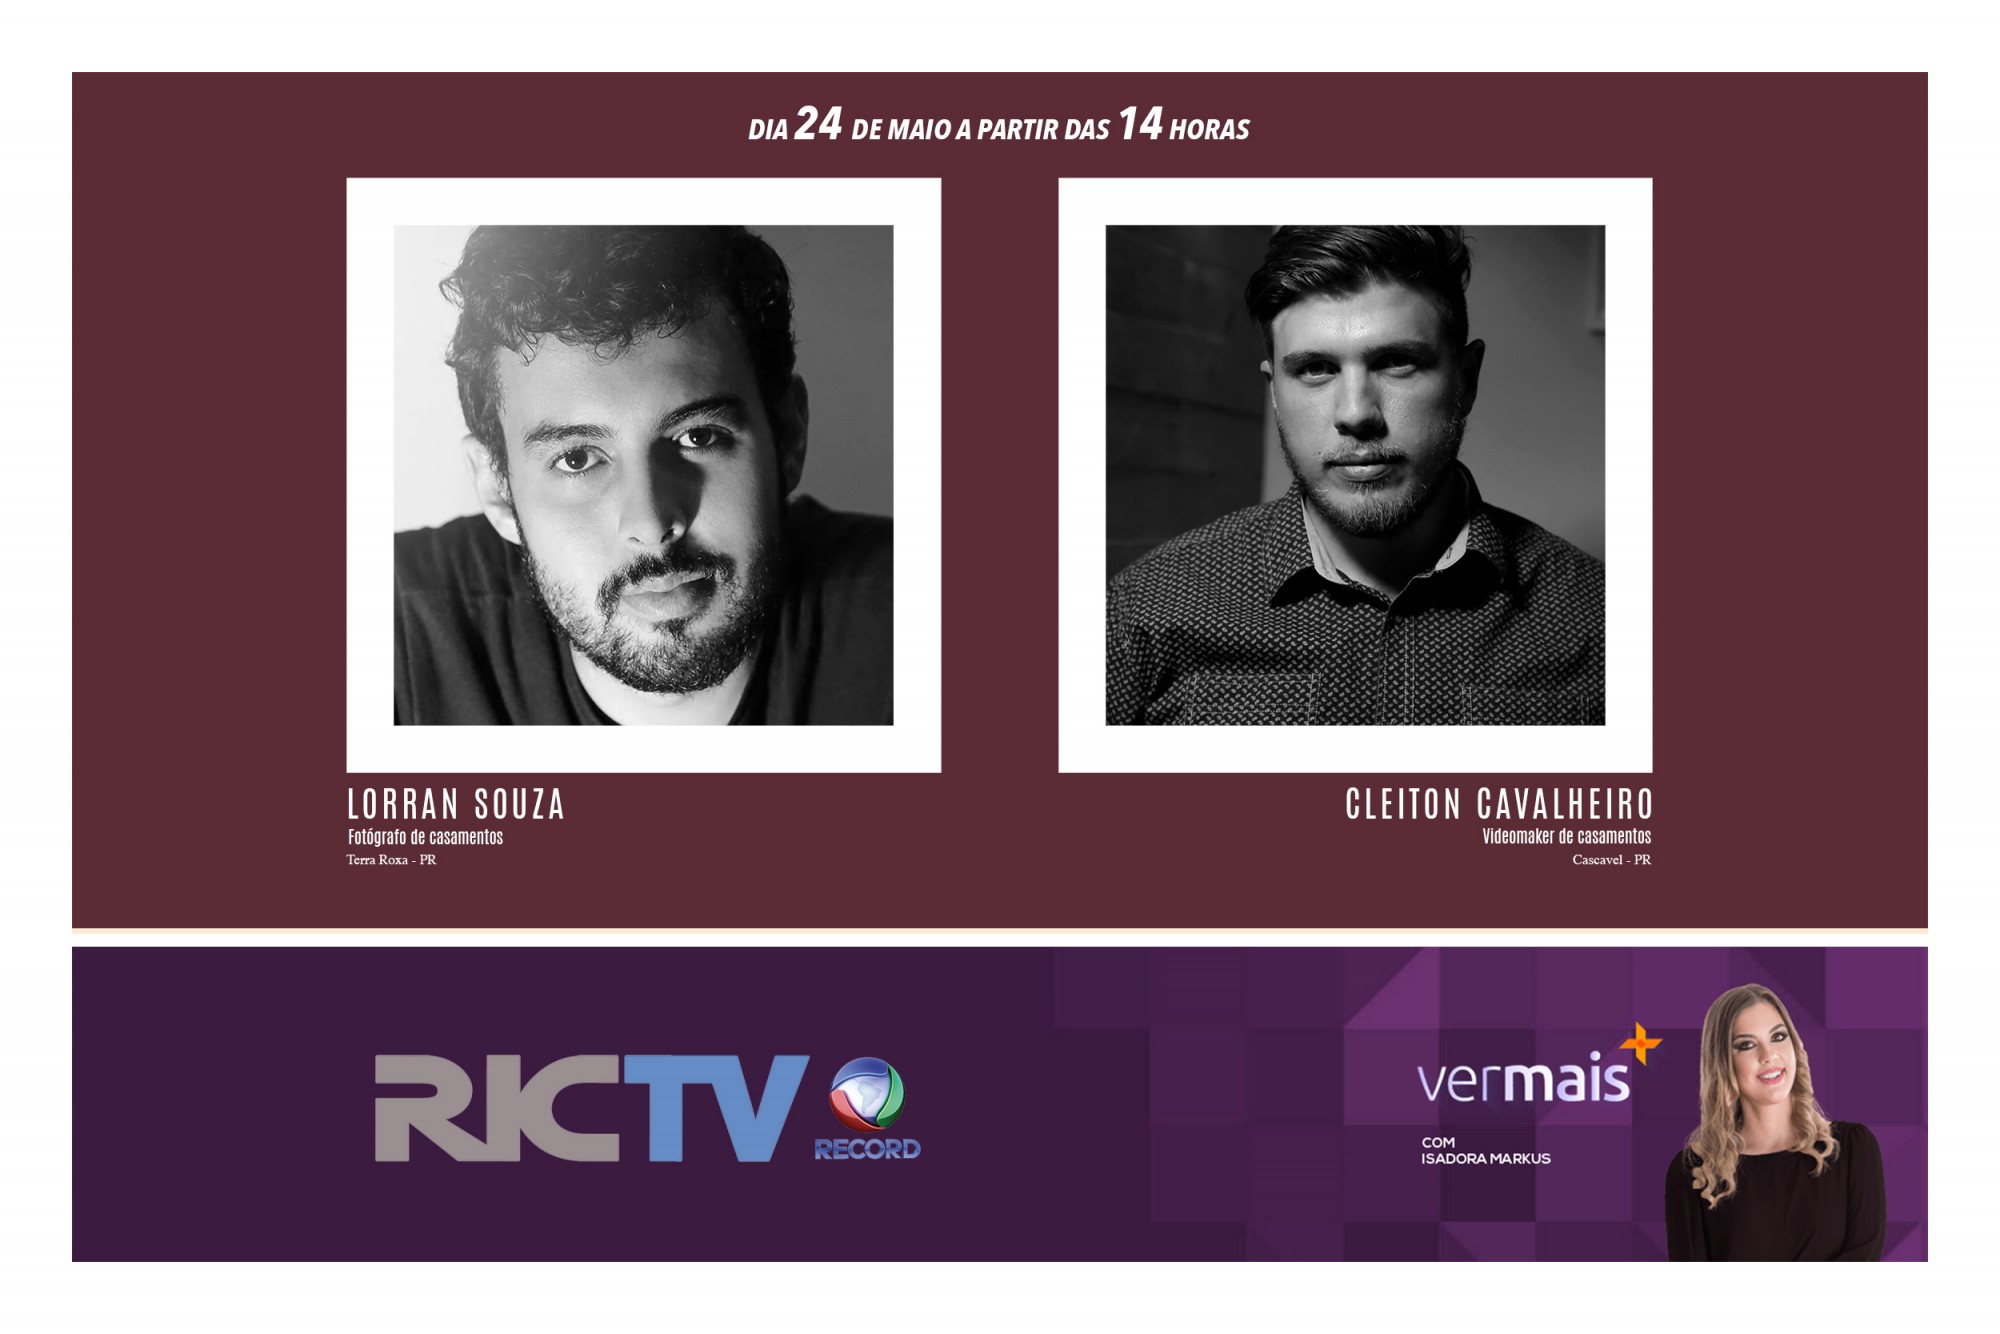 Lorran Souza e Cleiton Cavalheiro em entrevista para programa ver mais da rede record e ric tv